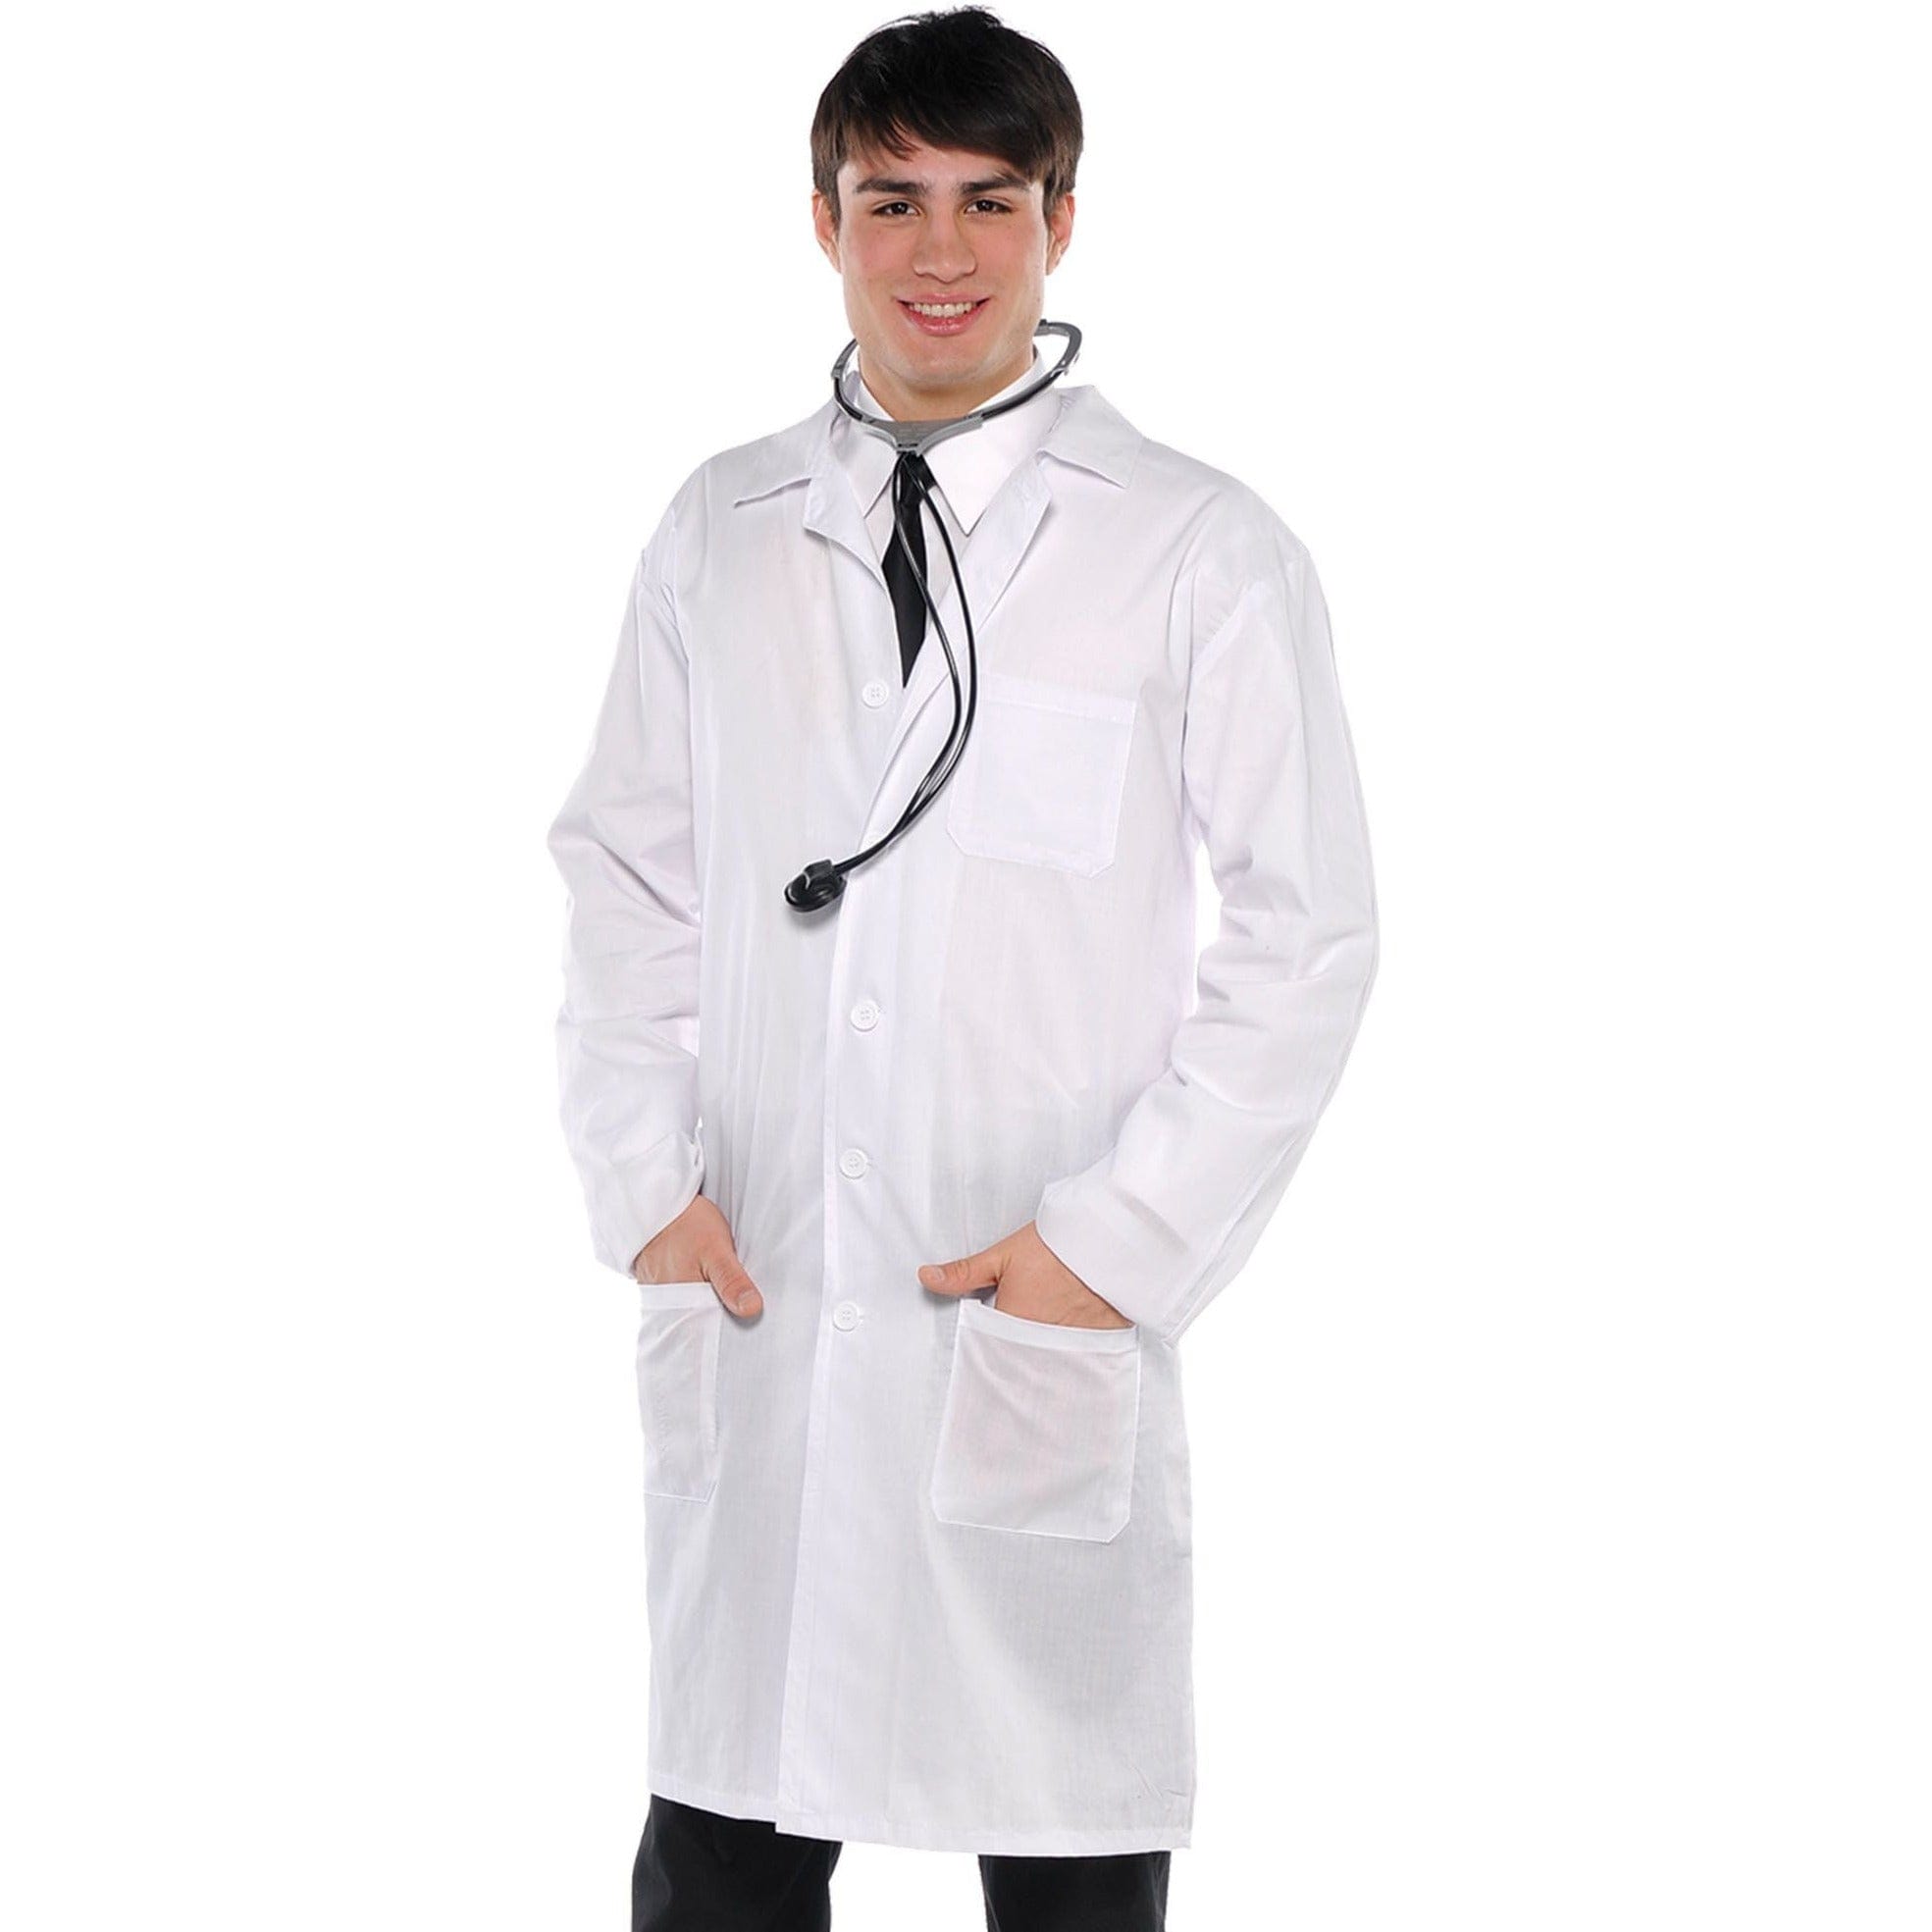 Amscan COSTUMES Doctor Coat - Adult